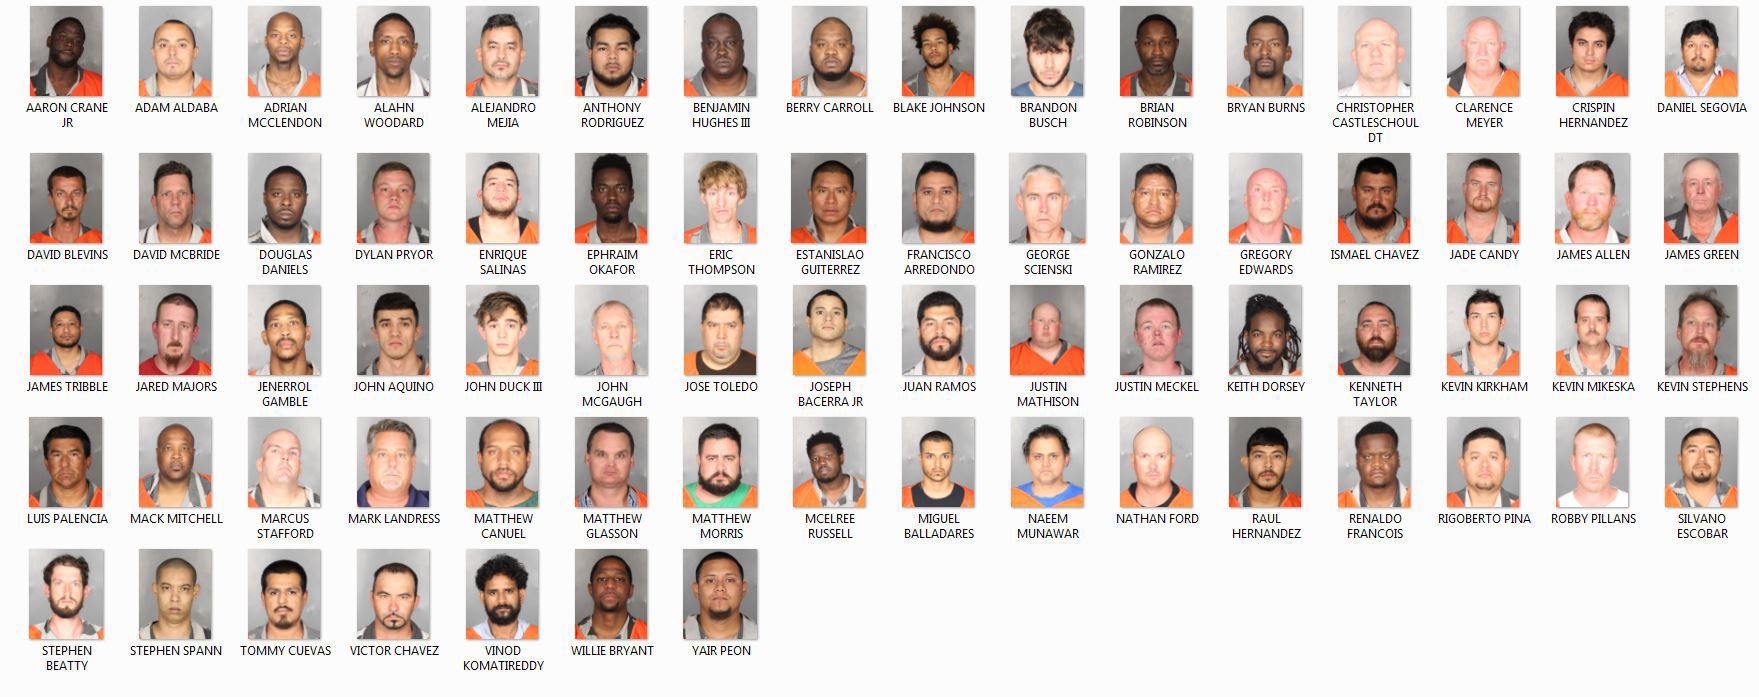 199 escorts found in Orlando FL, United States